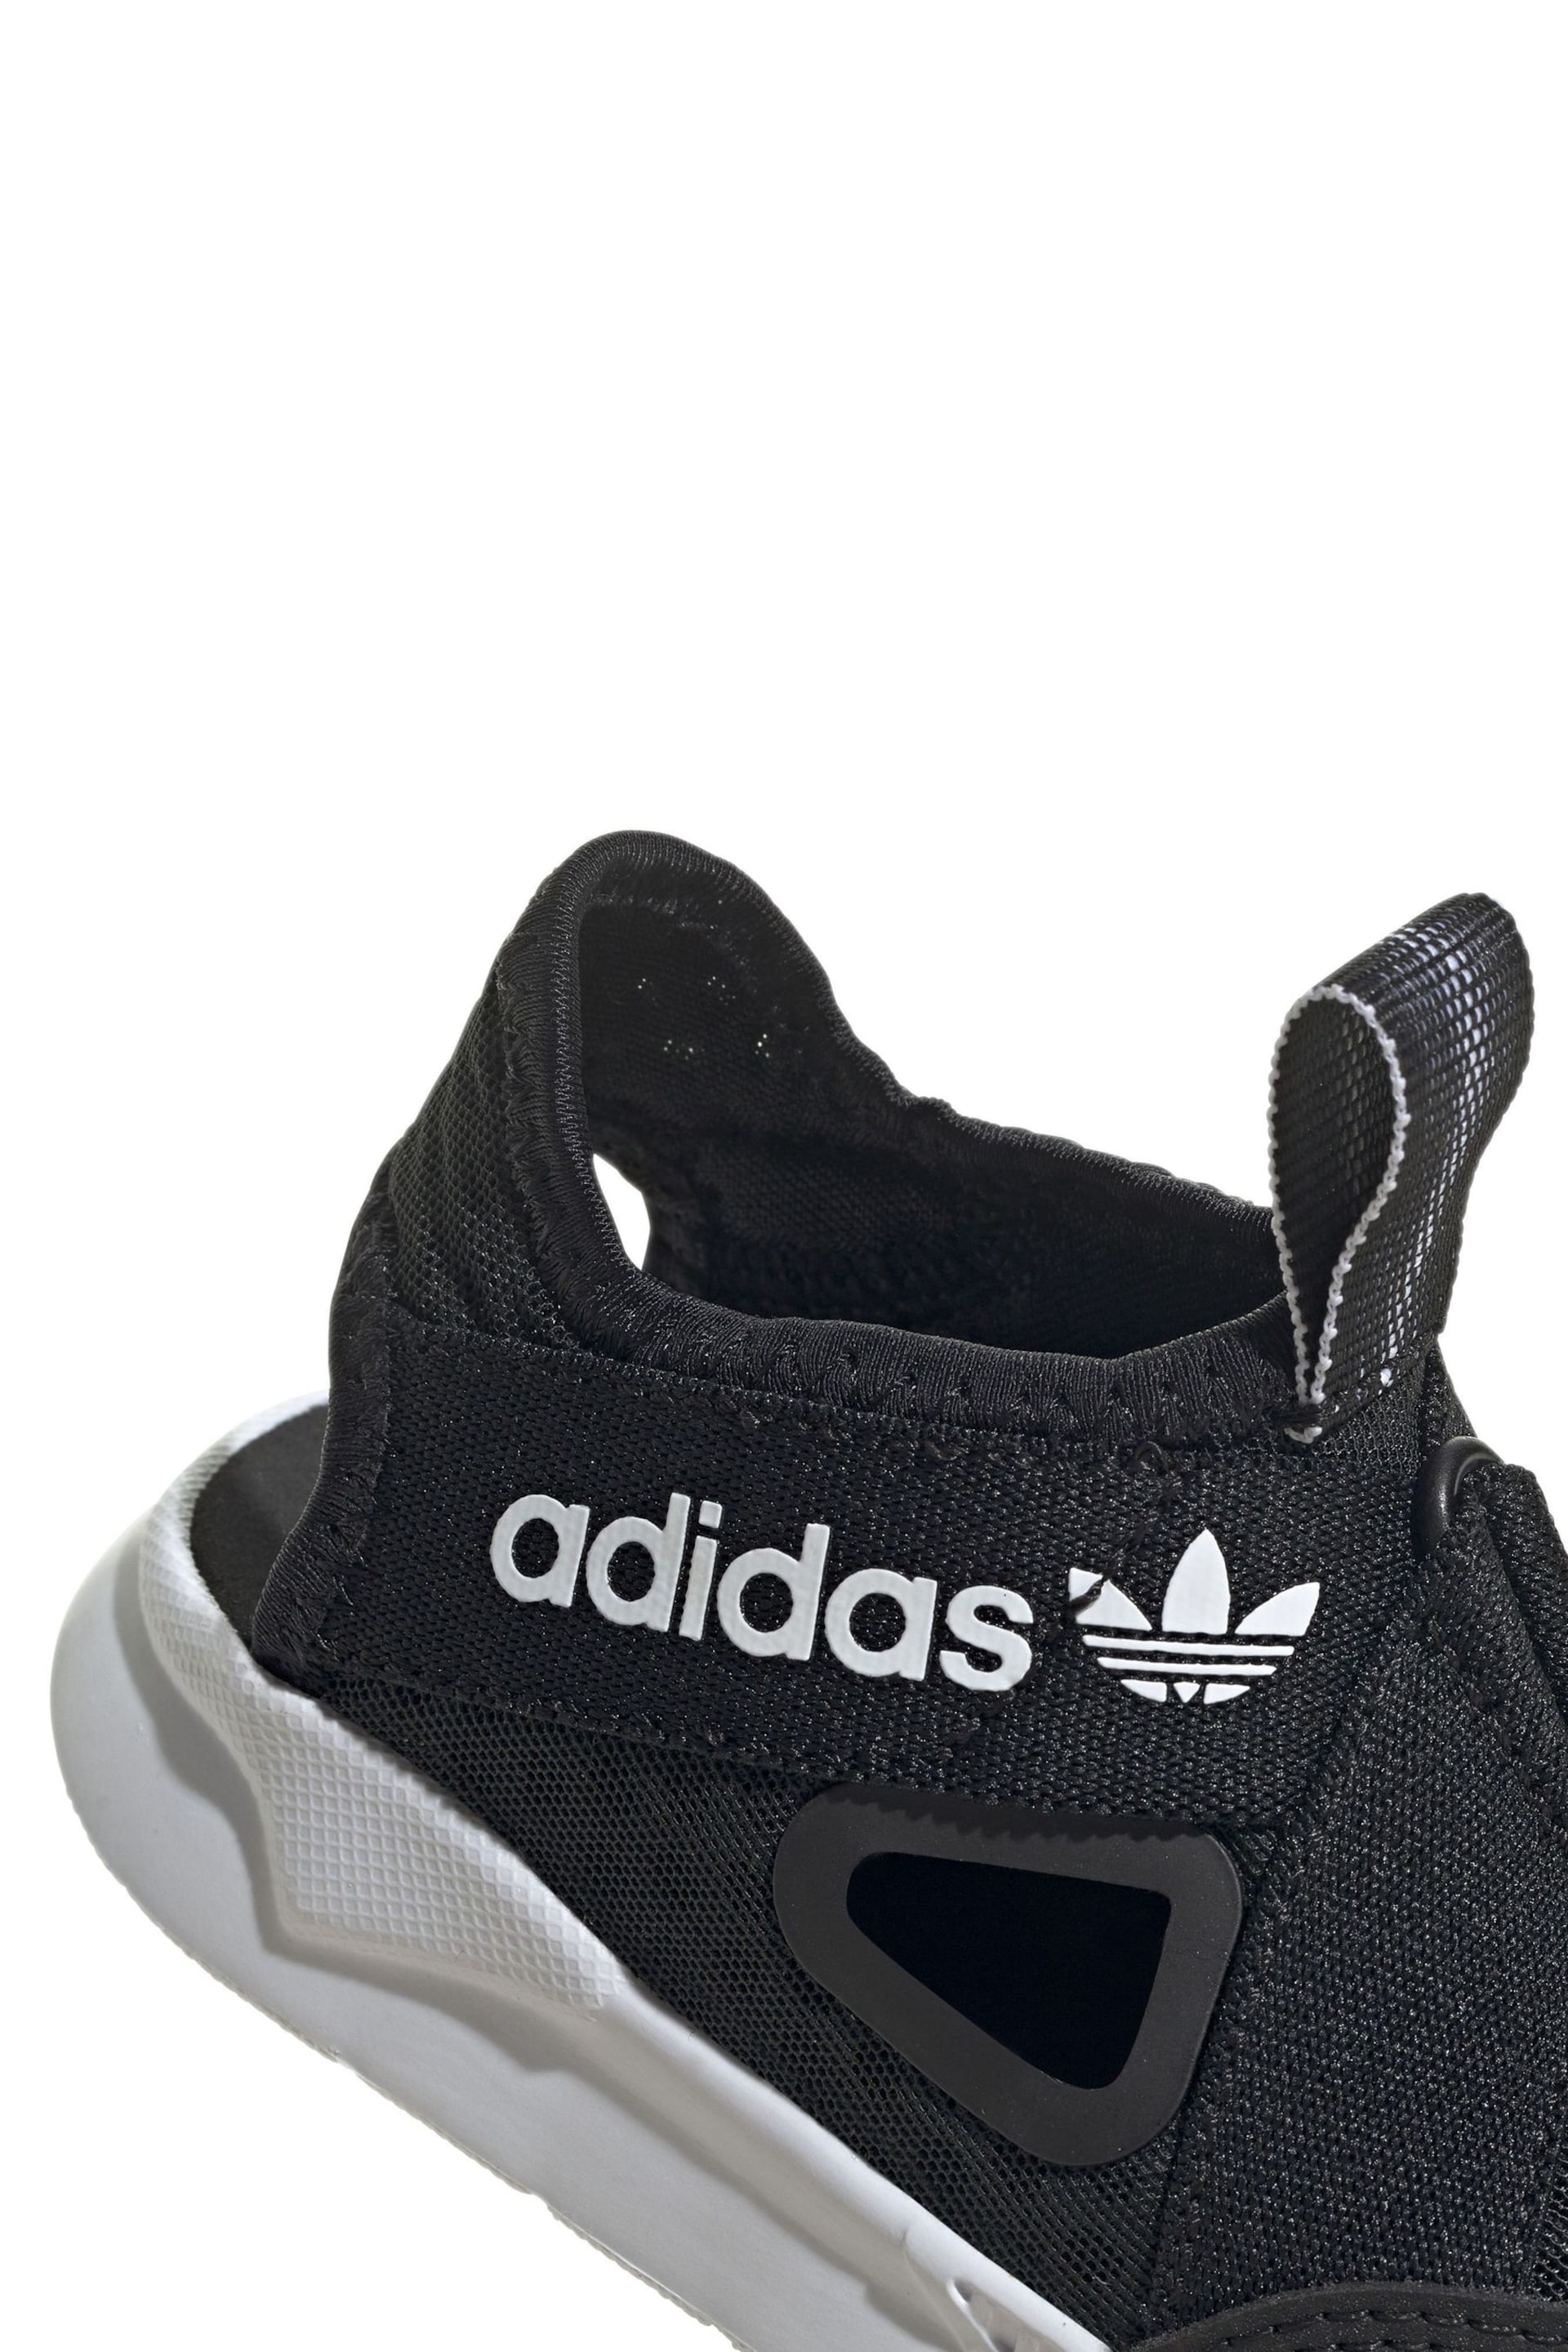 adidas Originals 360 Infant Black Sandals - Image 7 of 8